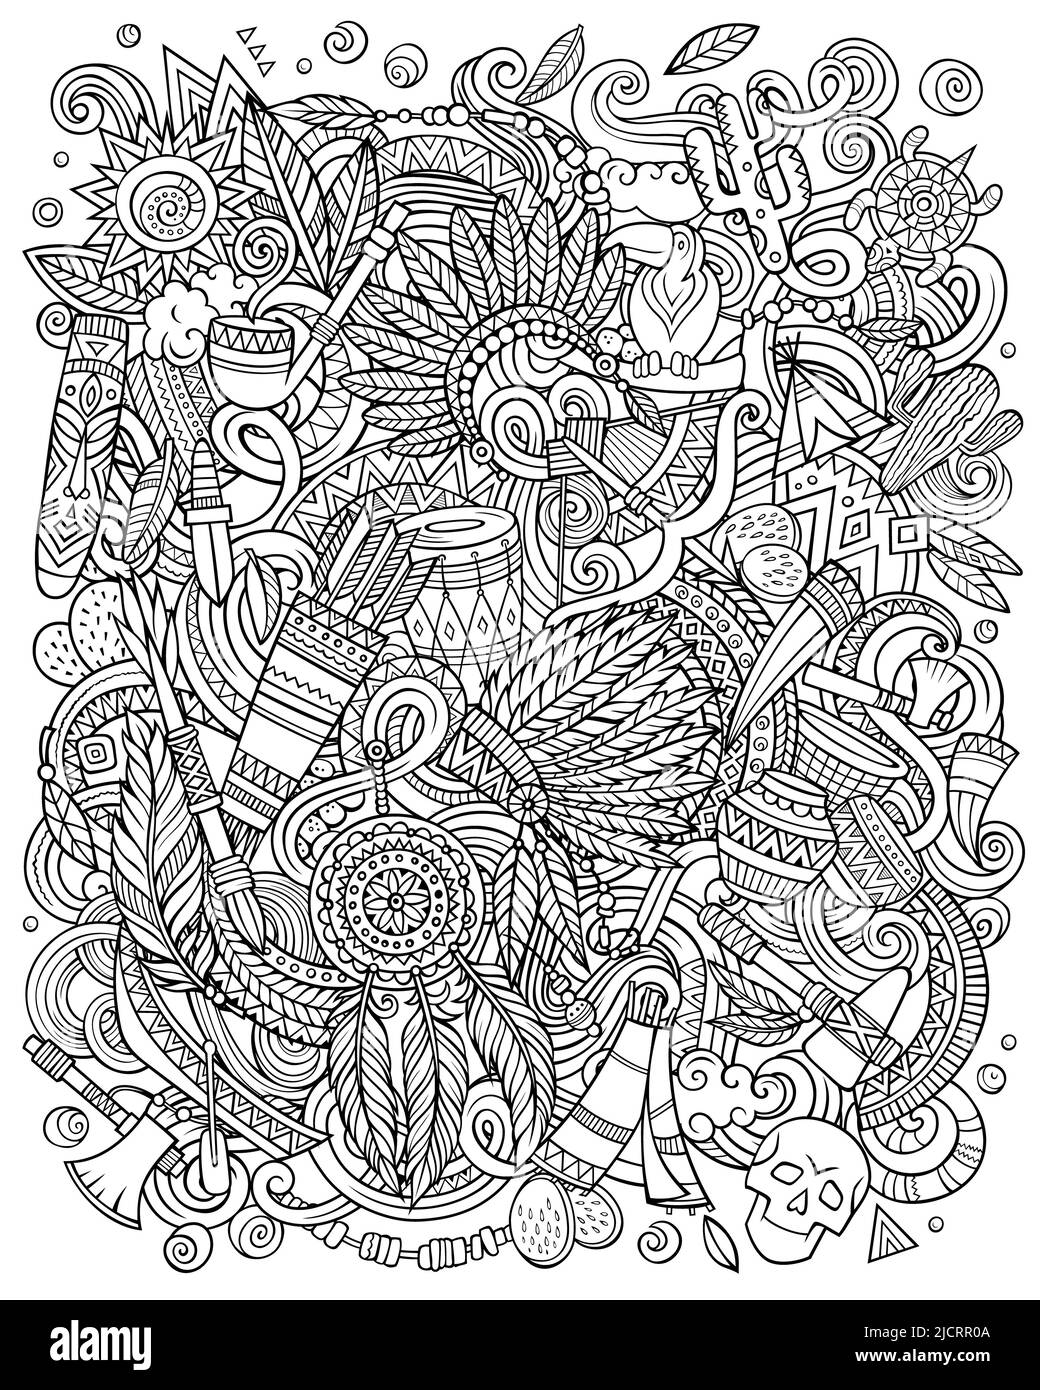 Native American Hand gezeichnet Raster doodles Illustration. Stockfoto